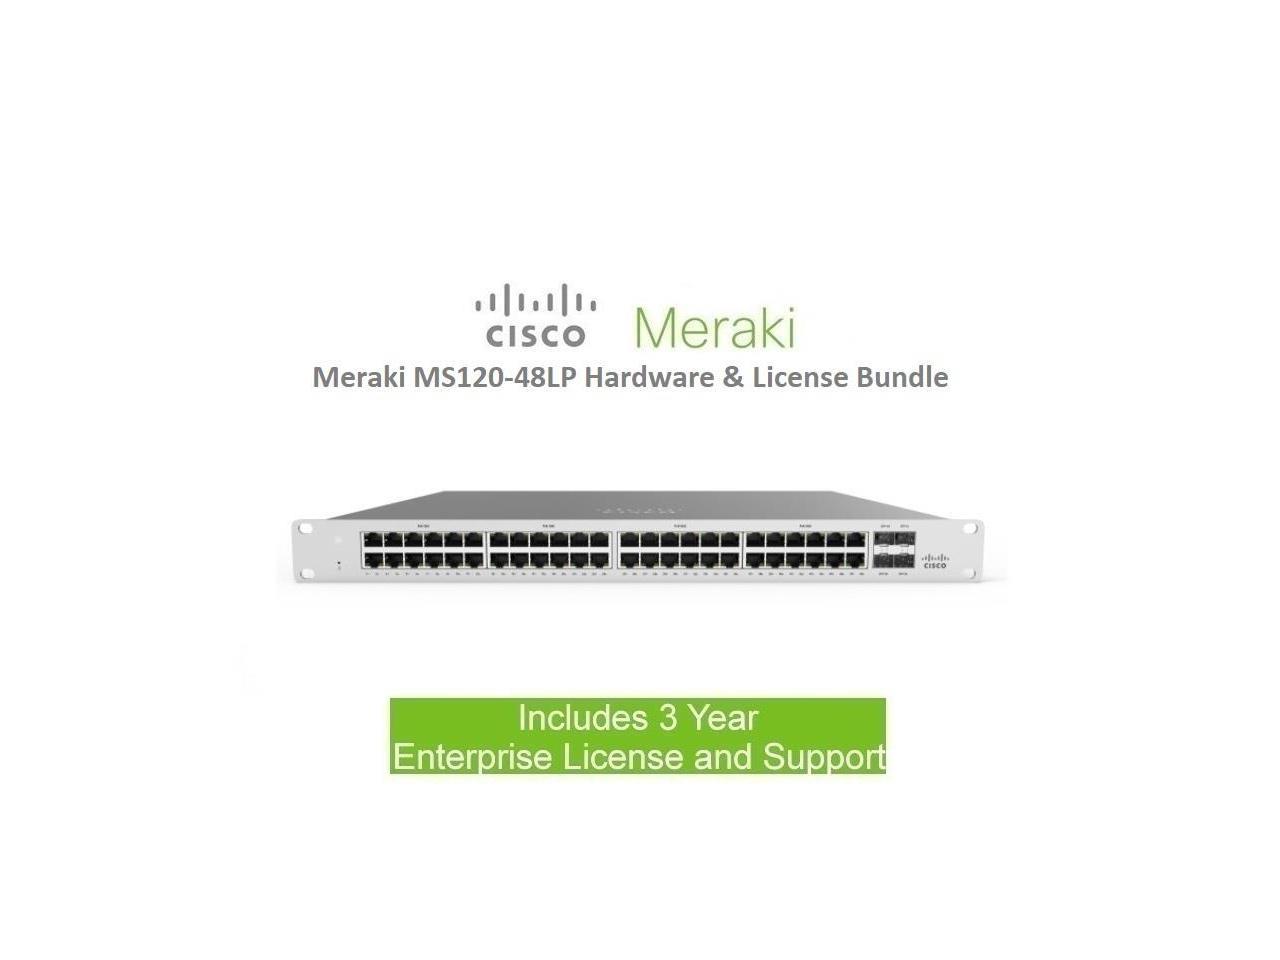 Cisco Meraki MS120-48LP 48 Port PoE Switch Includes 3 Year Enterprise License